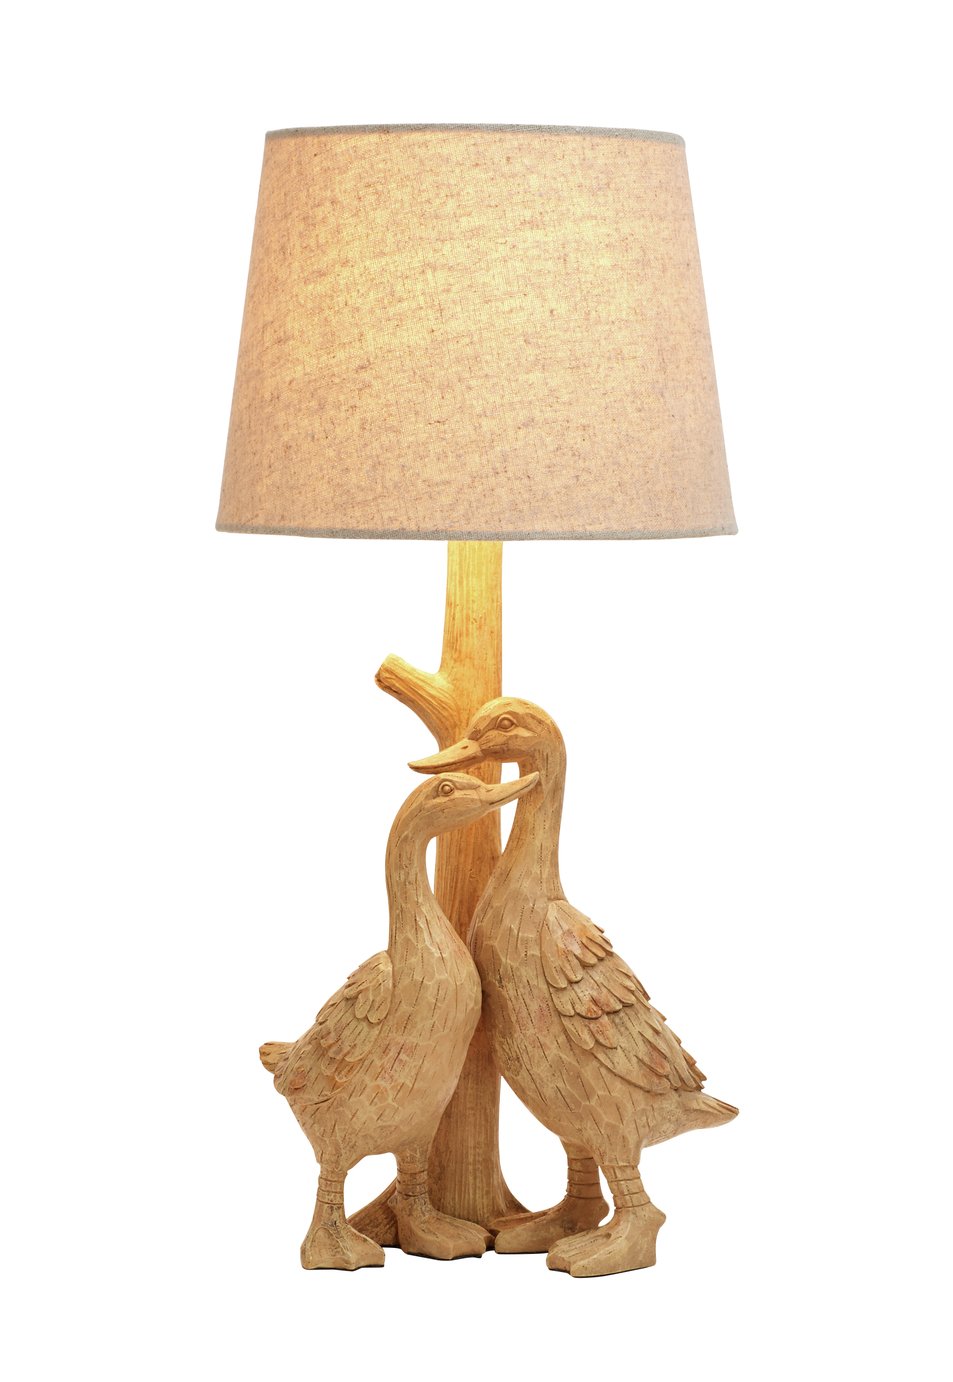 Argos Home Ducks Table Lamp - Natural